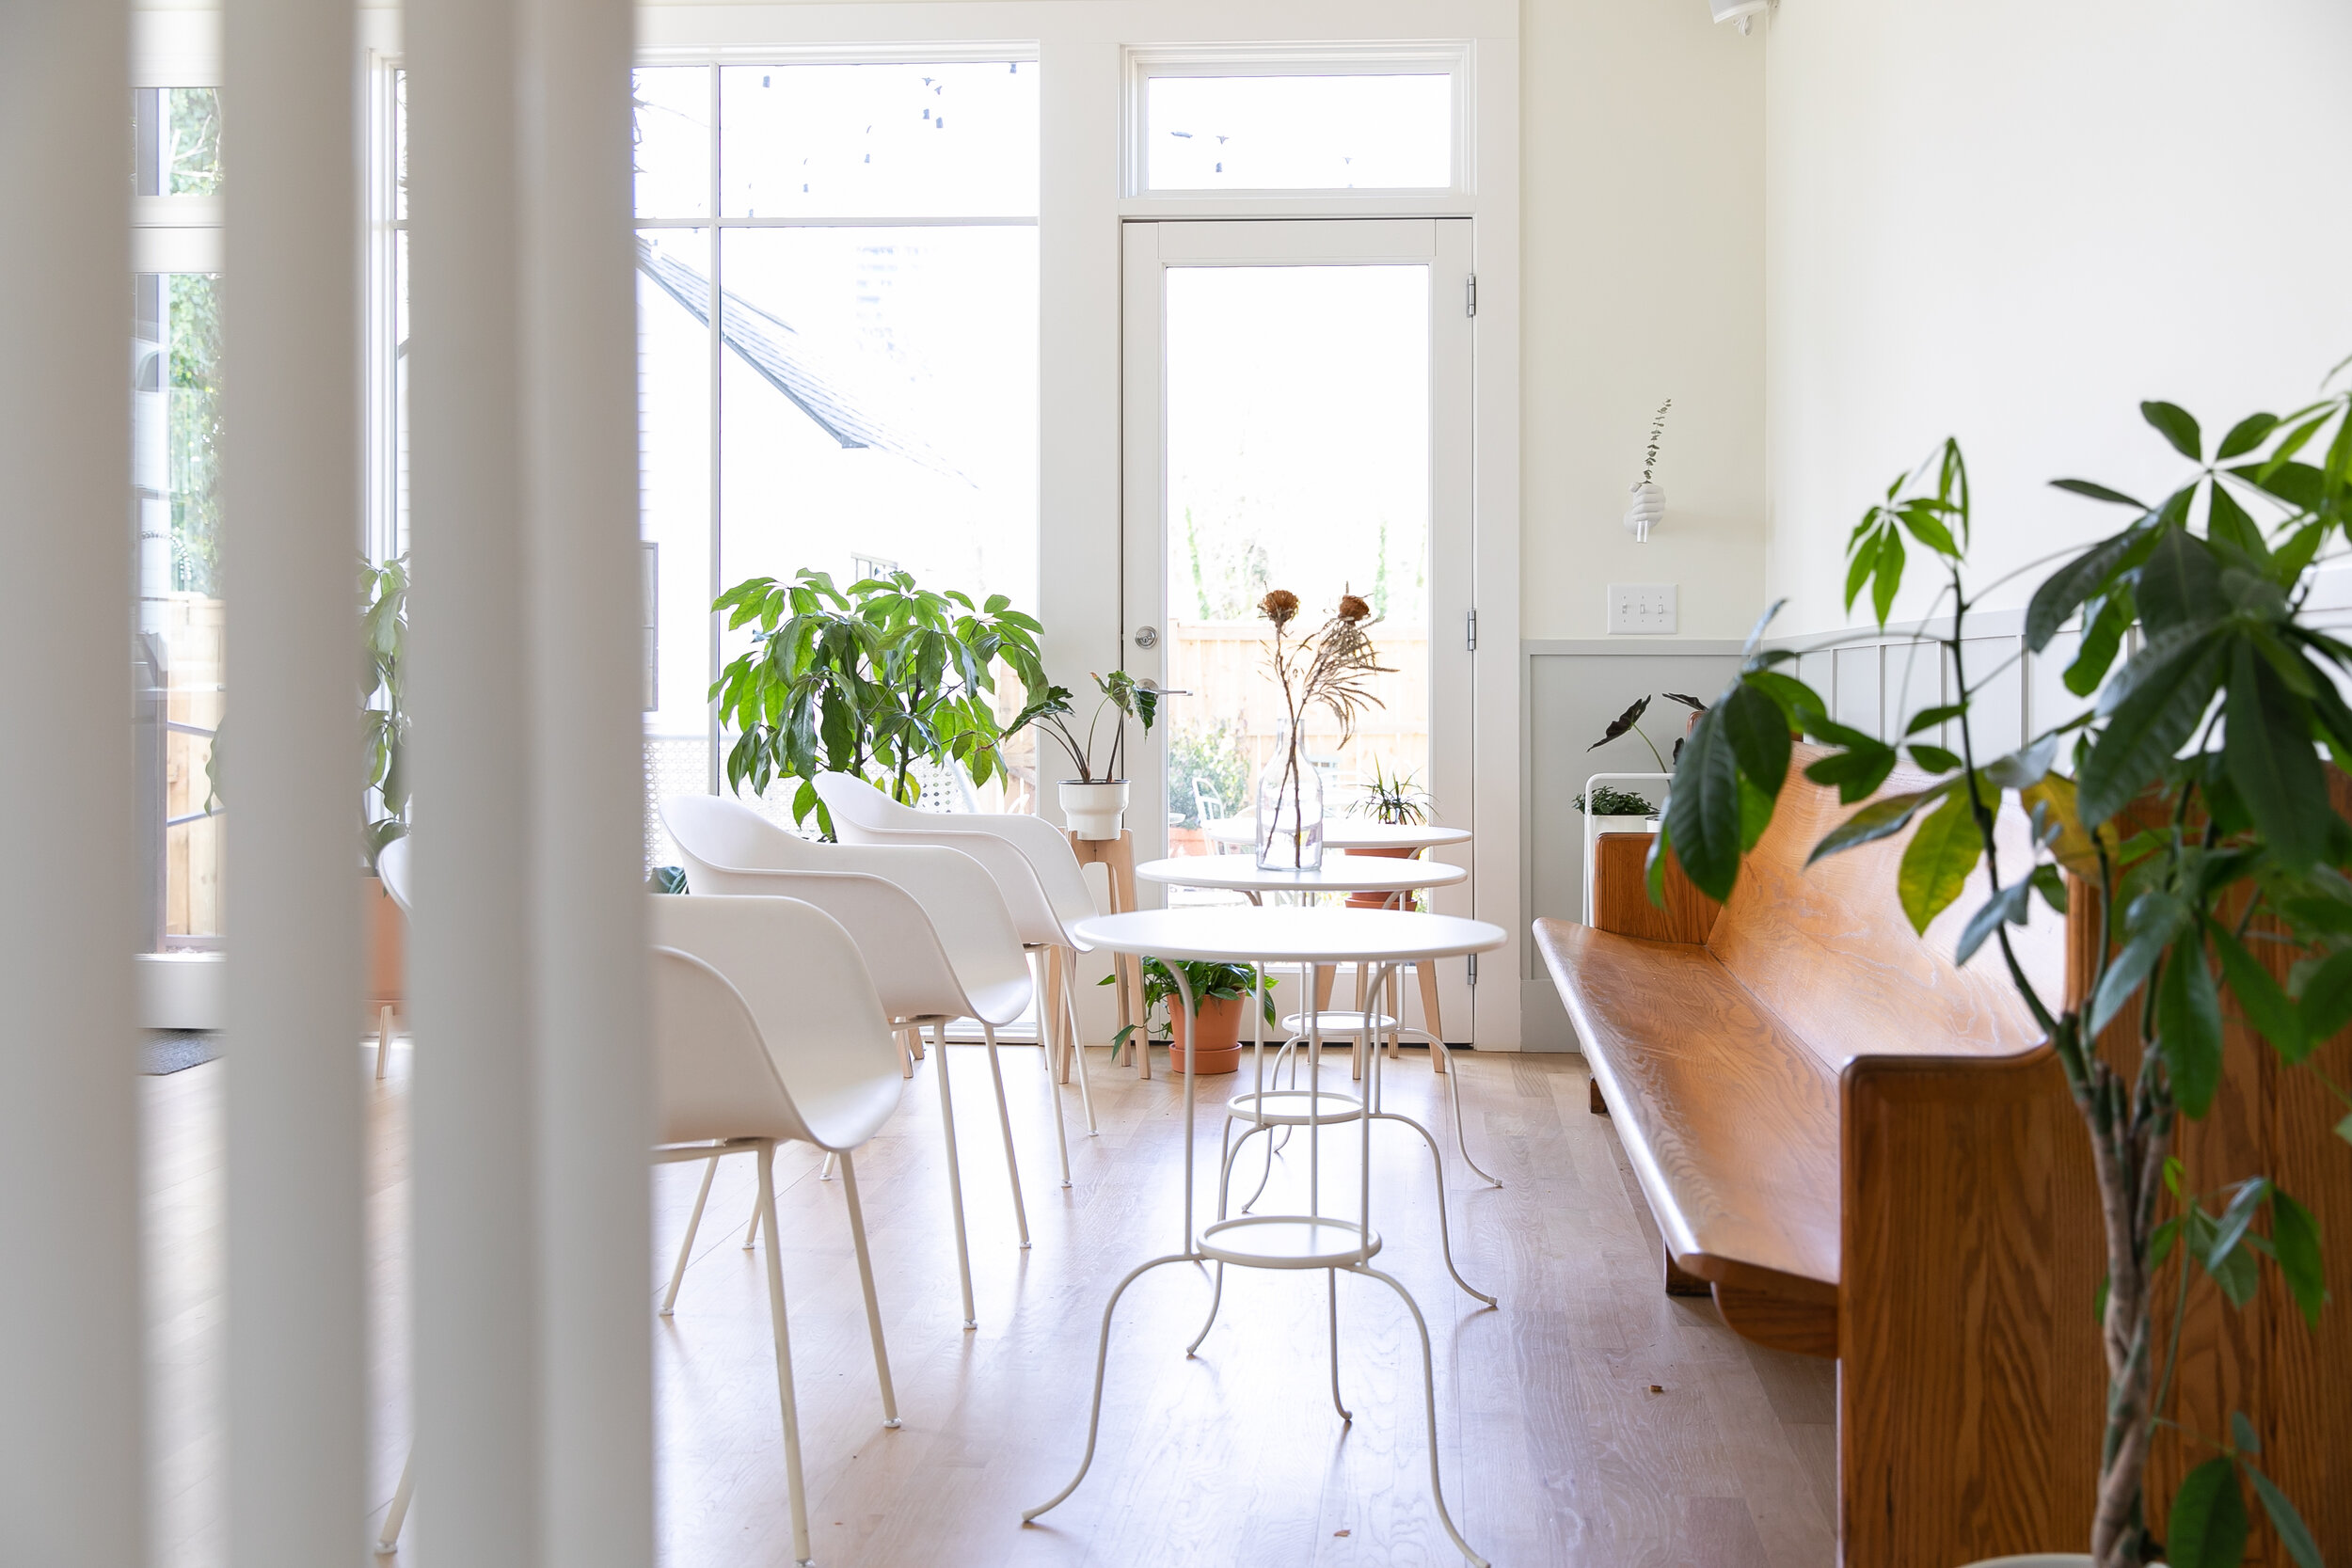 10 Guest House Raleigh - Common Space Kitchen - Photo by Leslie Ryann McKellar.jpg